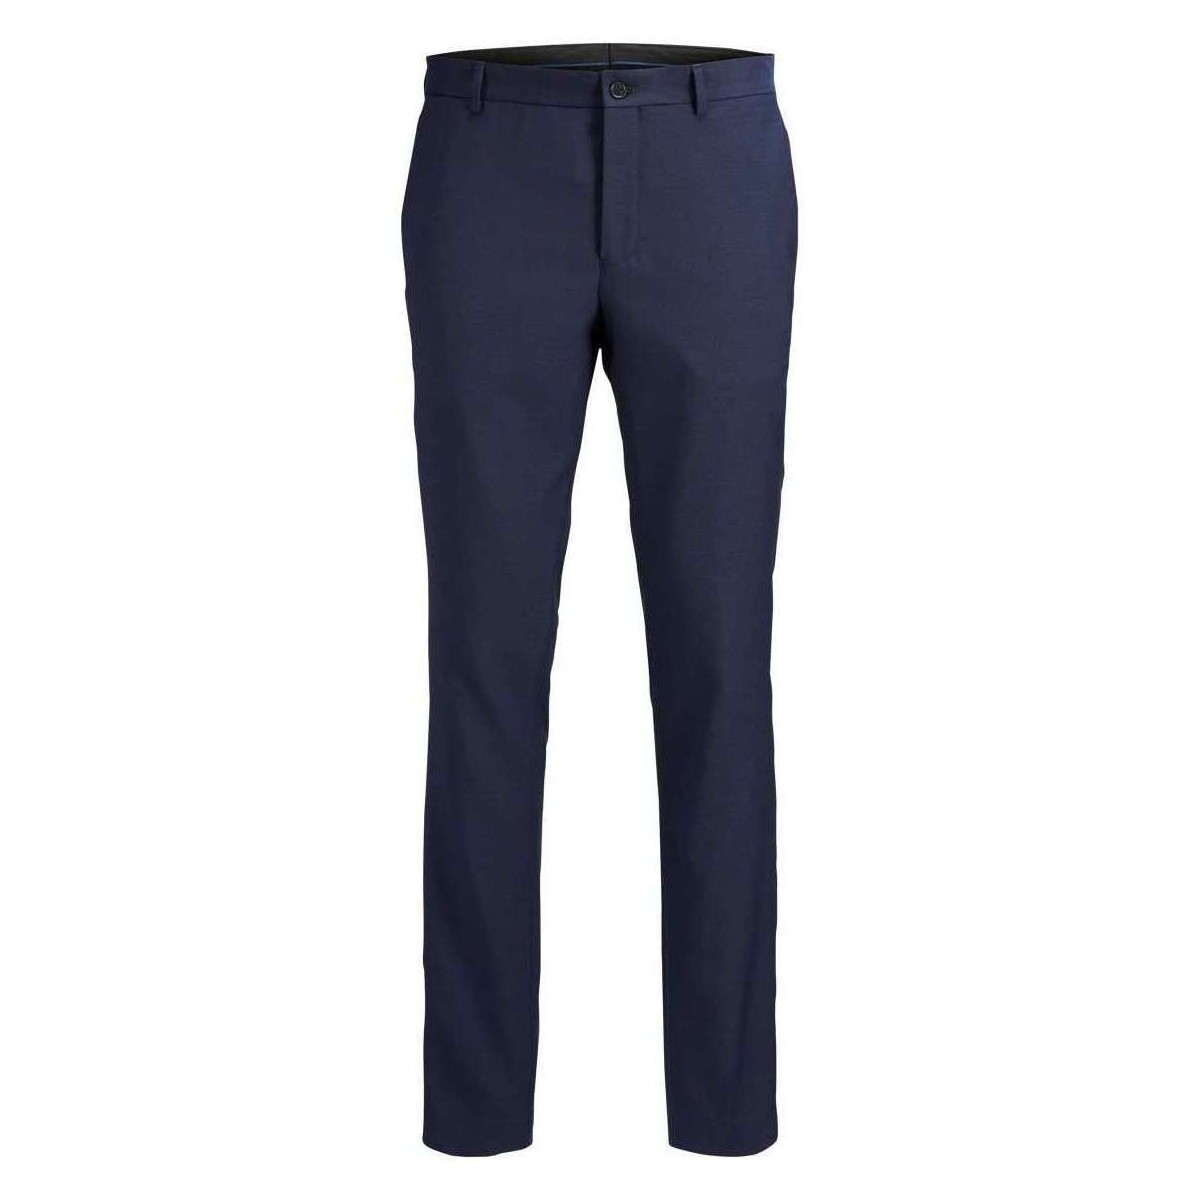 Vêtements Homme Pantalons 5 poches Premium By Jack & Jones 75531VTPER27 Marine